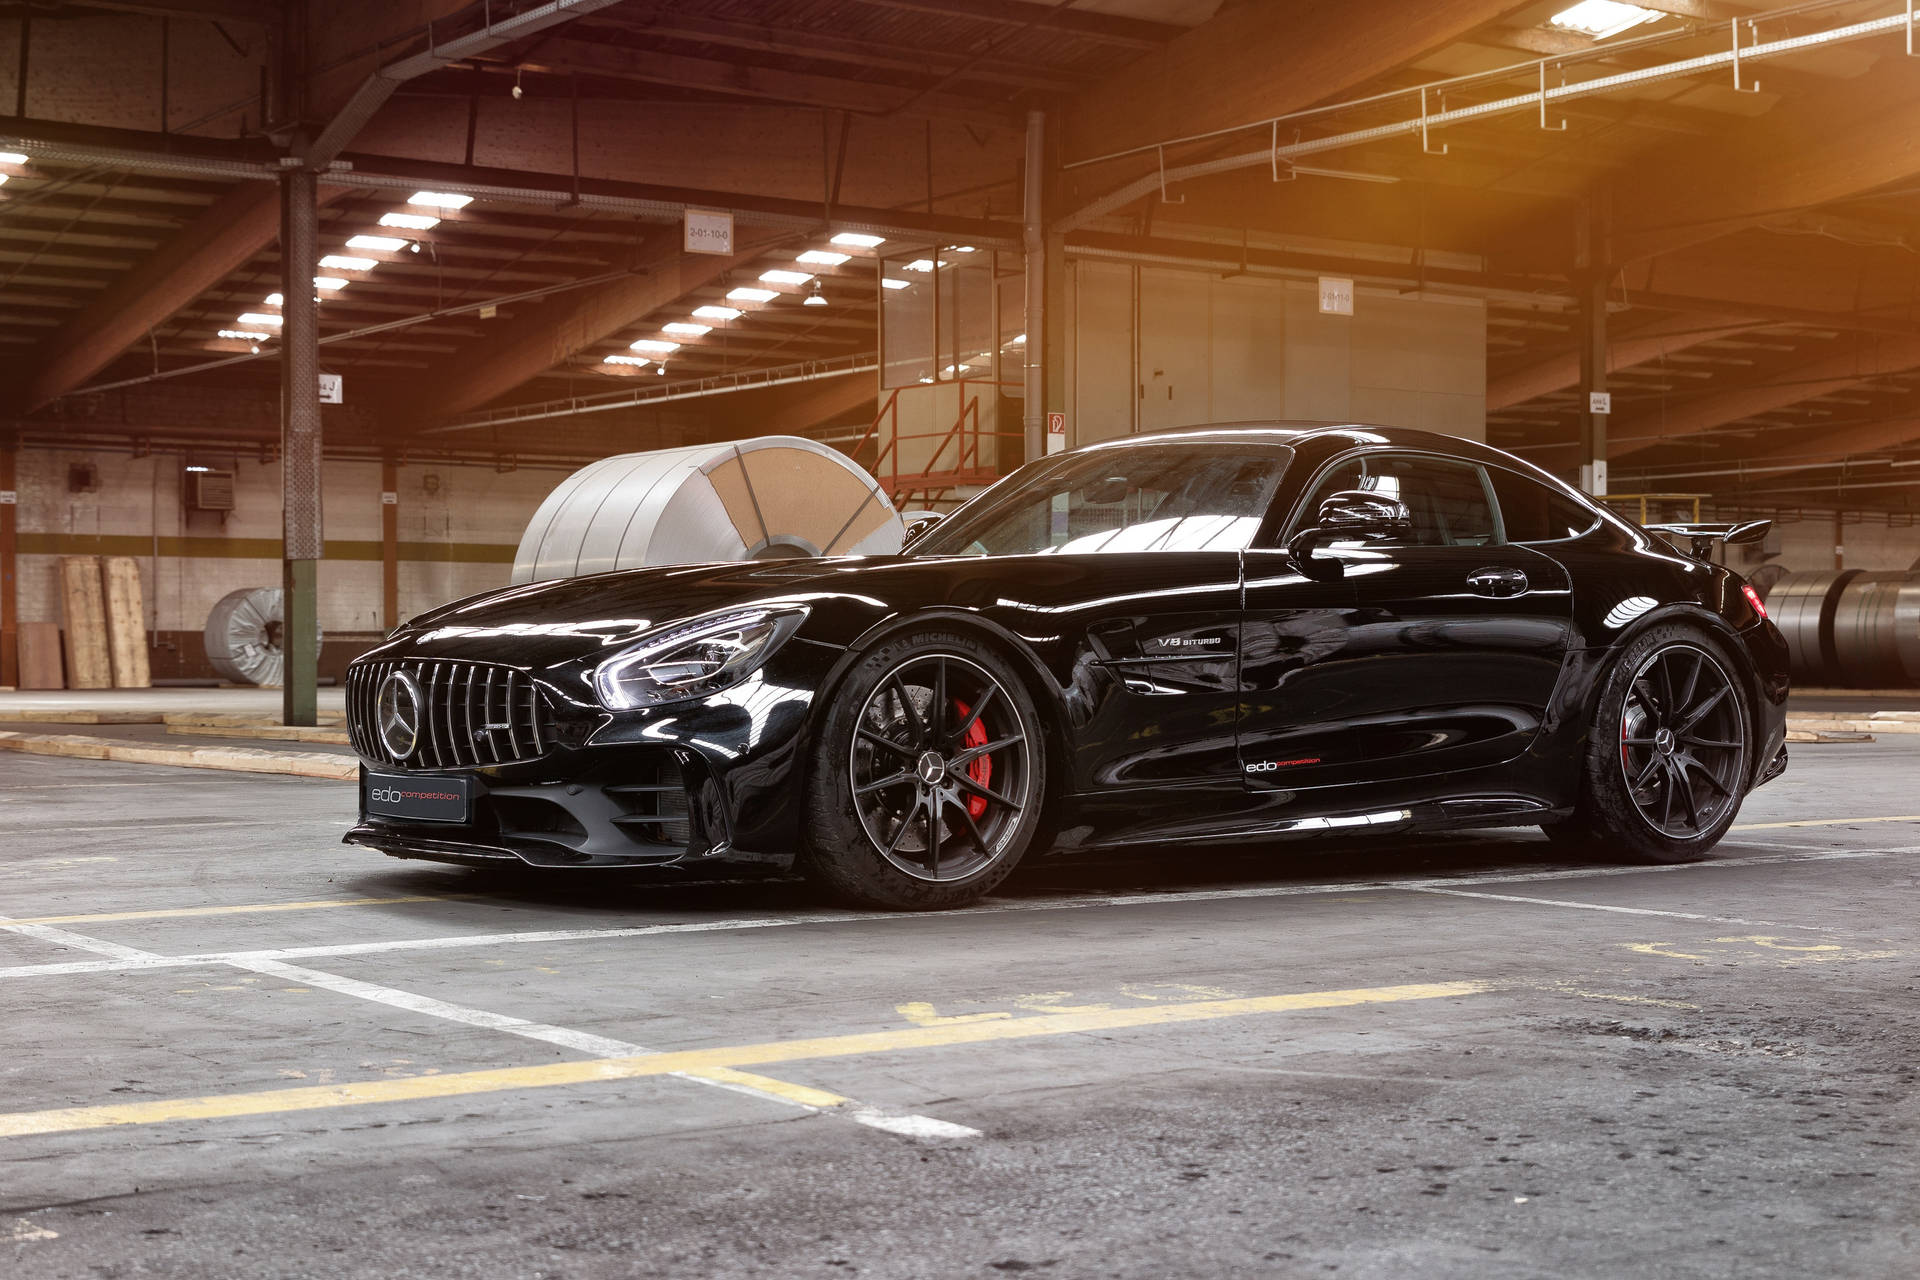 Caption: Majestic Black Mercedes Amg Gt R Showcasing Power And Elegance